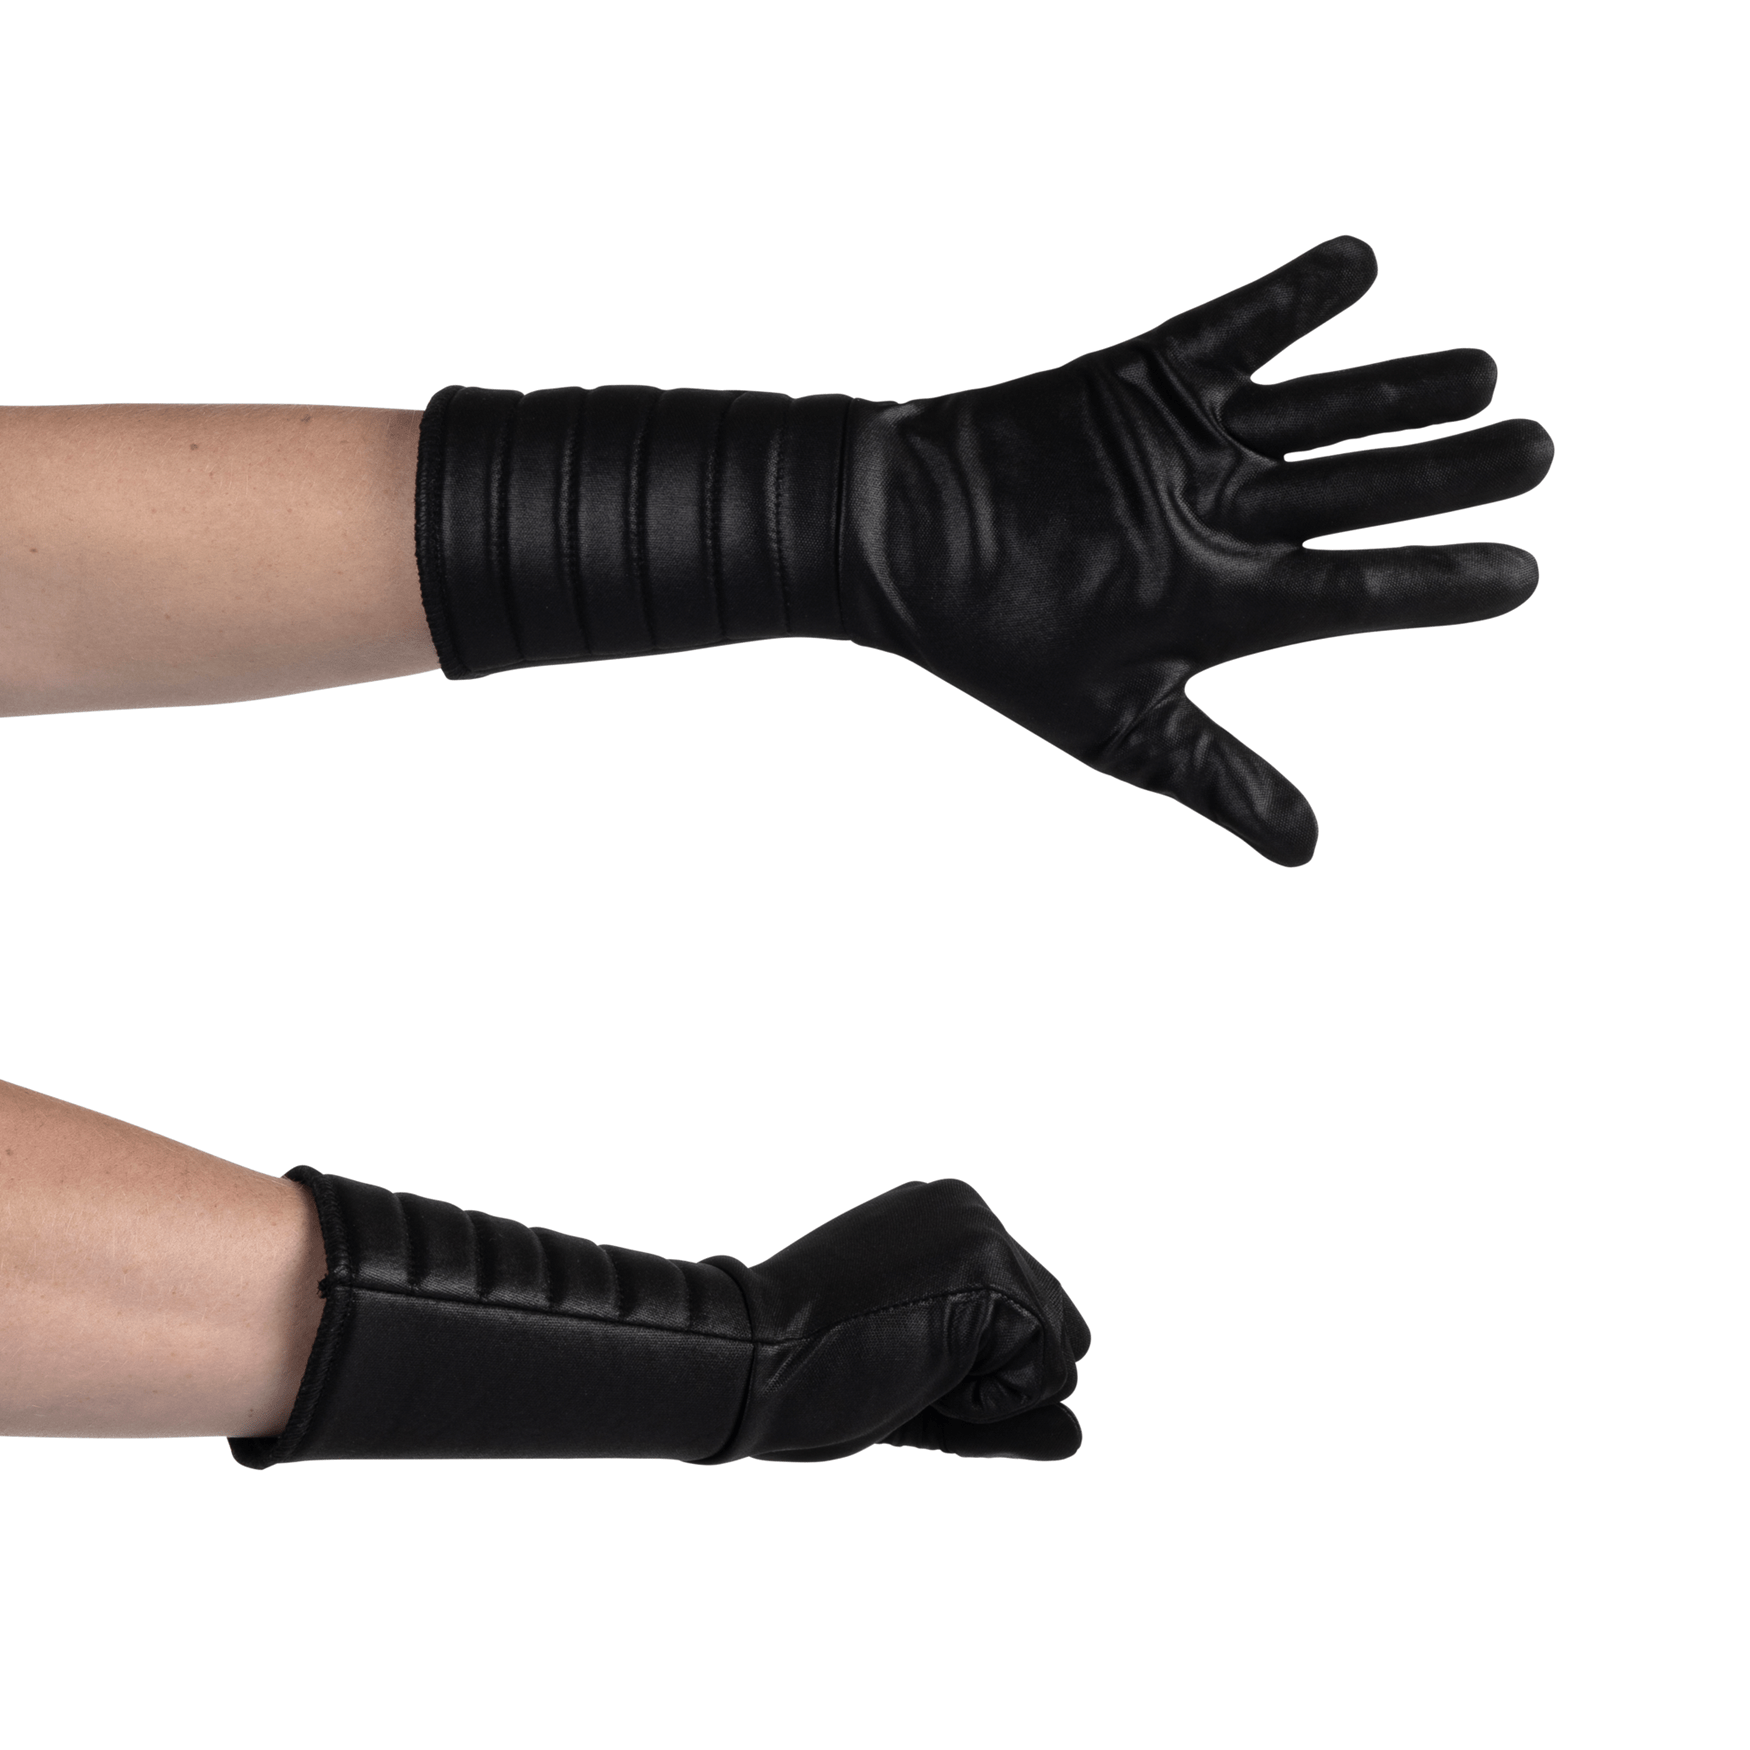 Adult Star Wars Deluxe Darth Vader Gloves , Costume Gloves